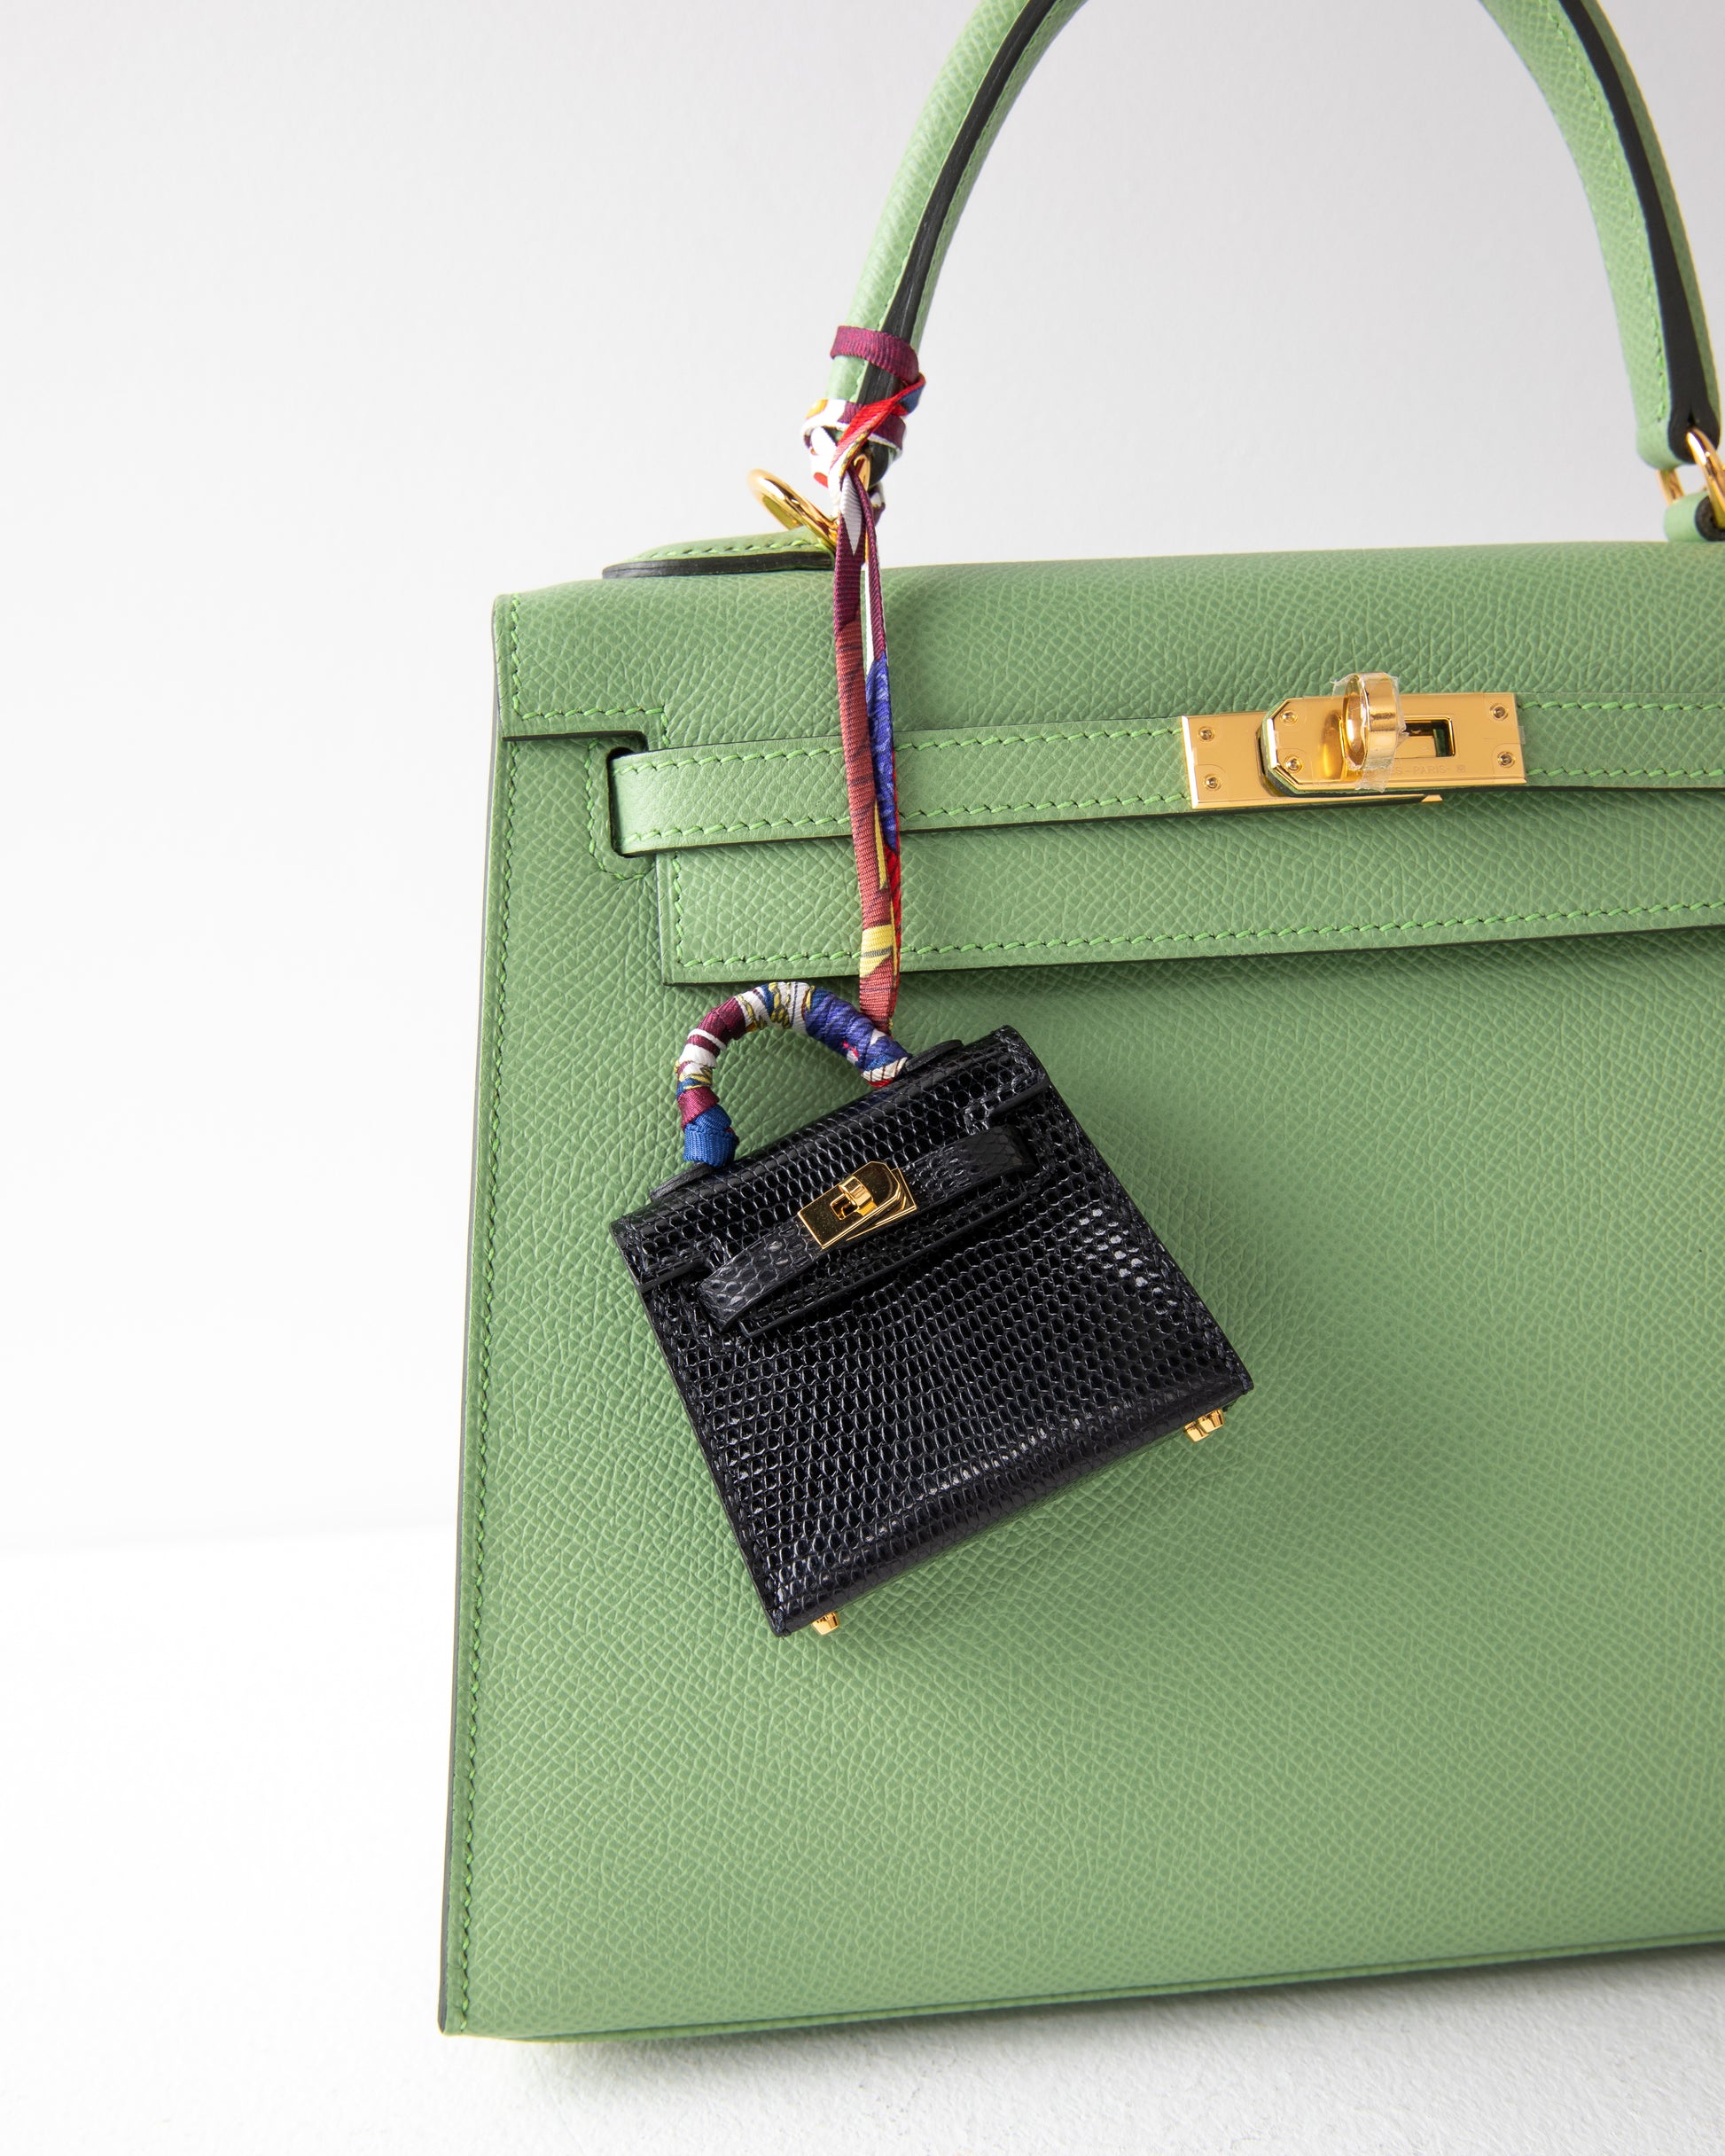 Hermès Micro Mini Kelly Twilly Bag Charm Black Box Calf Leather Palladium  Hardware